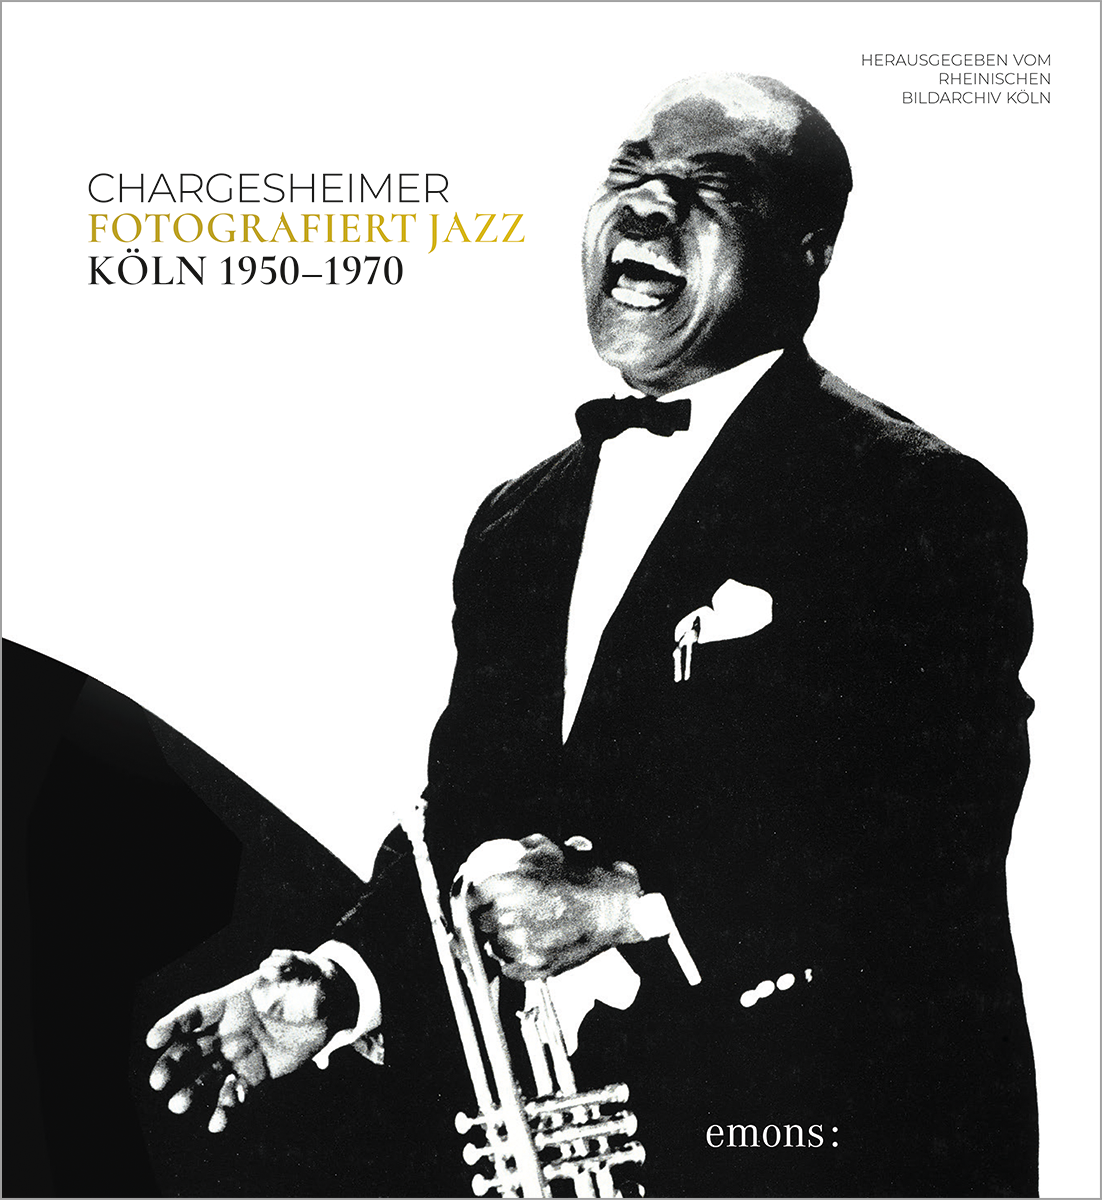 Chargesheimer fotografiert Jazz. Köln 1950 – 1970